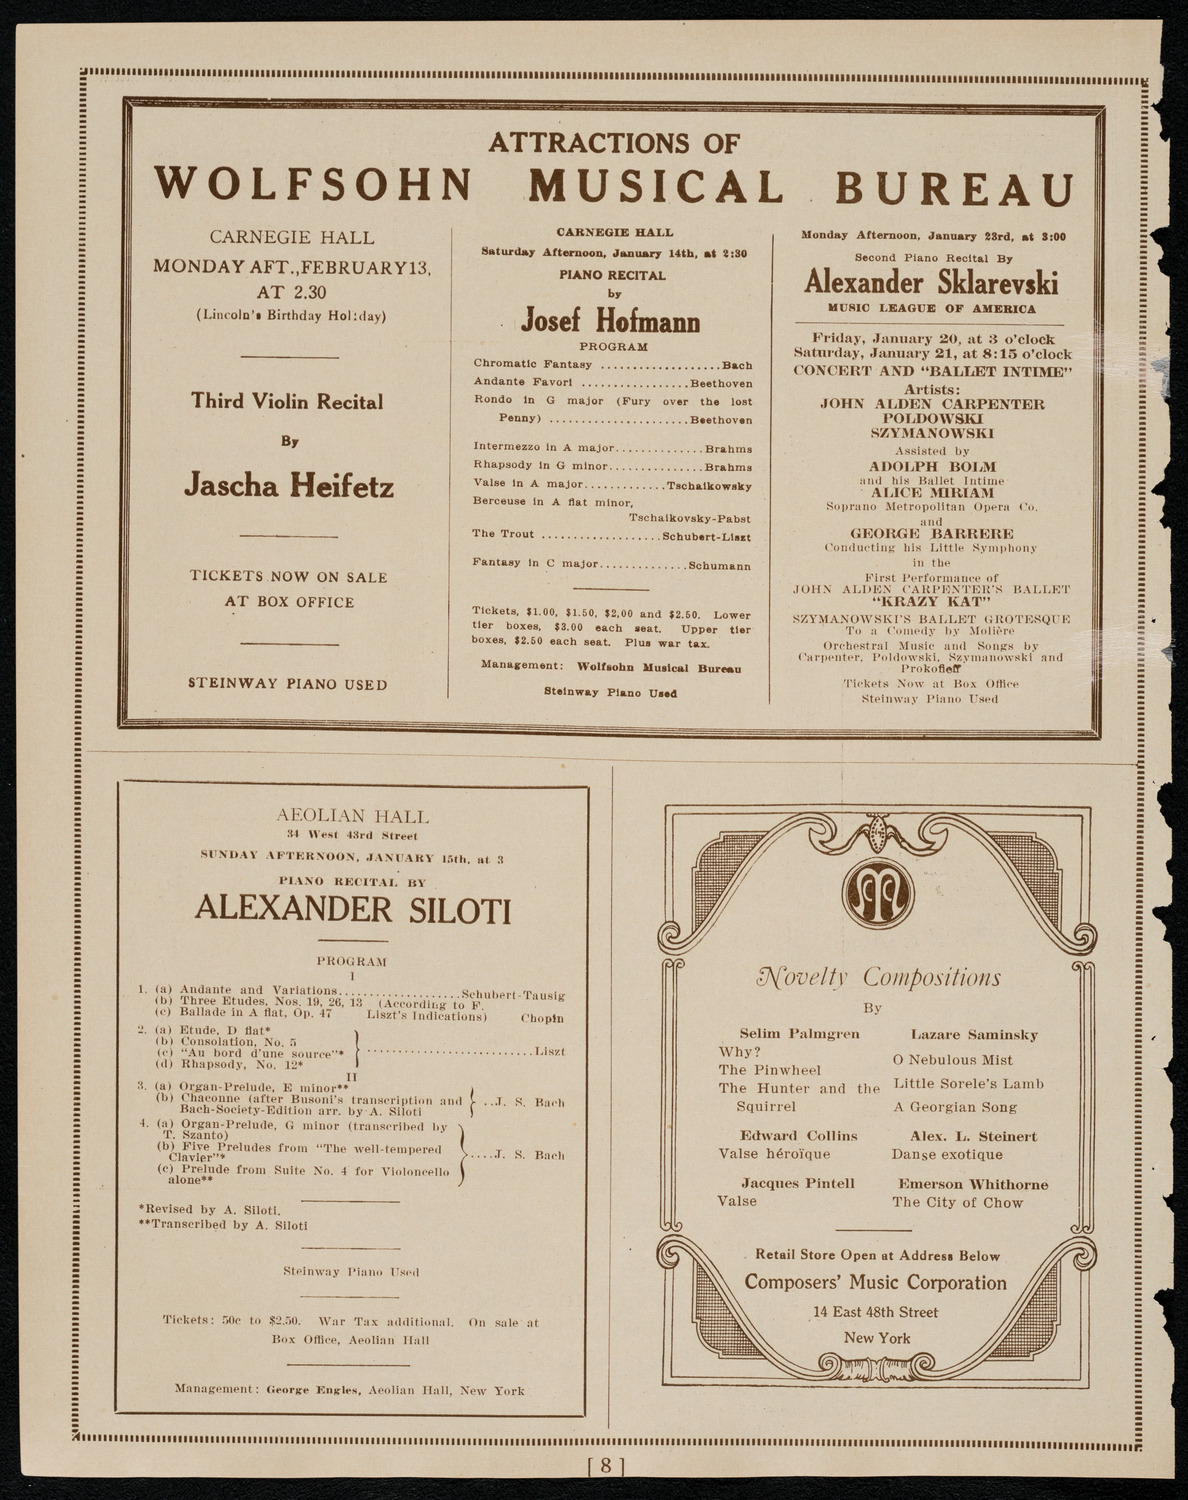 Burton Holmes Travelogue: Mexico, January 9, 1922, program page 8